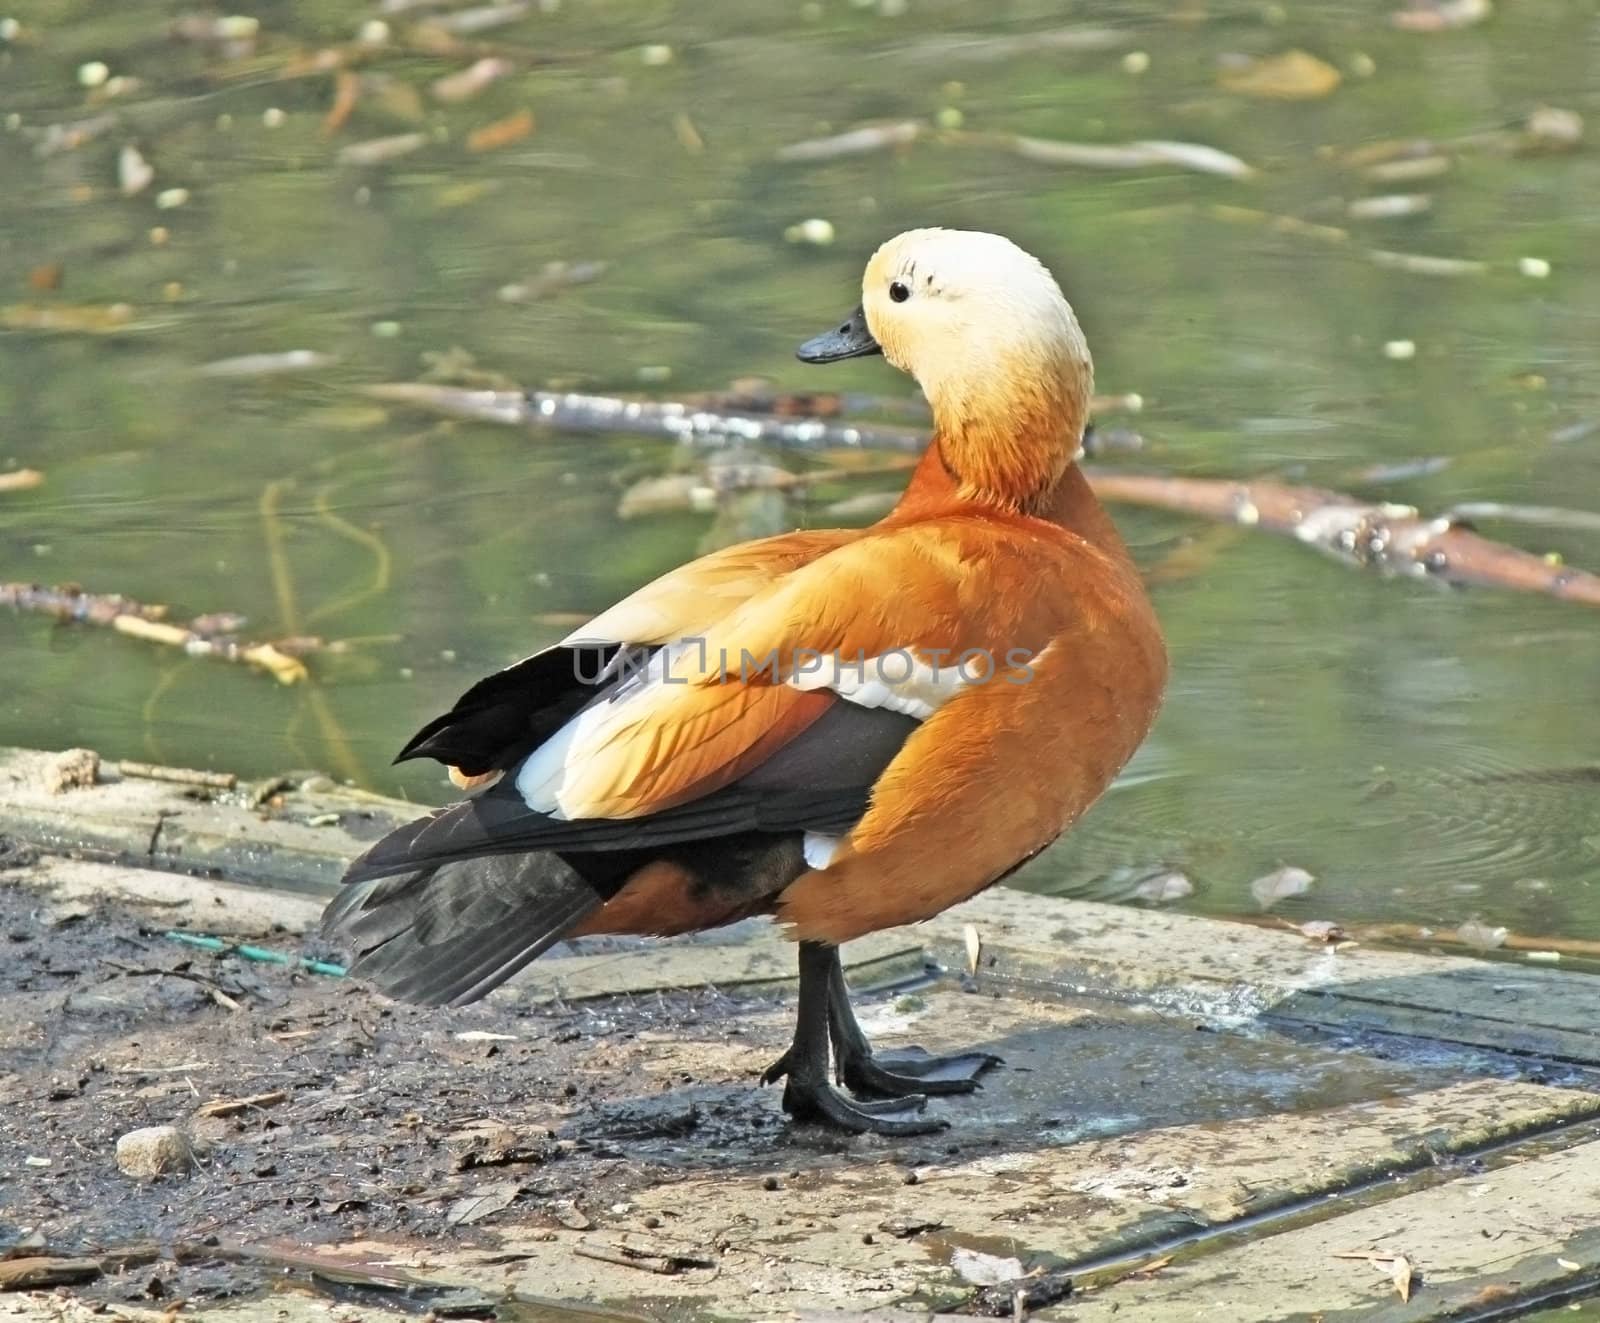 Orange duck in the pool looking back